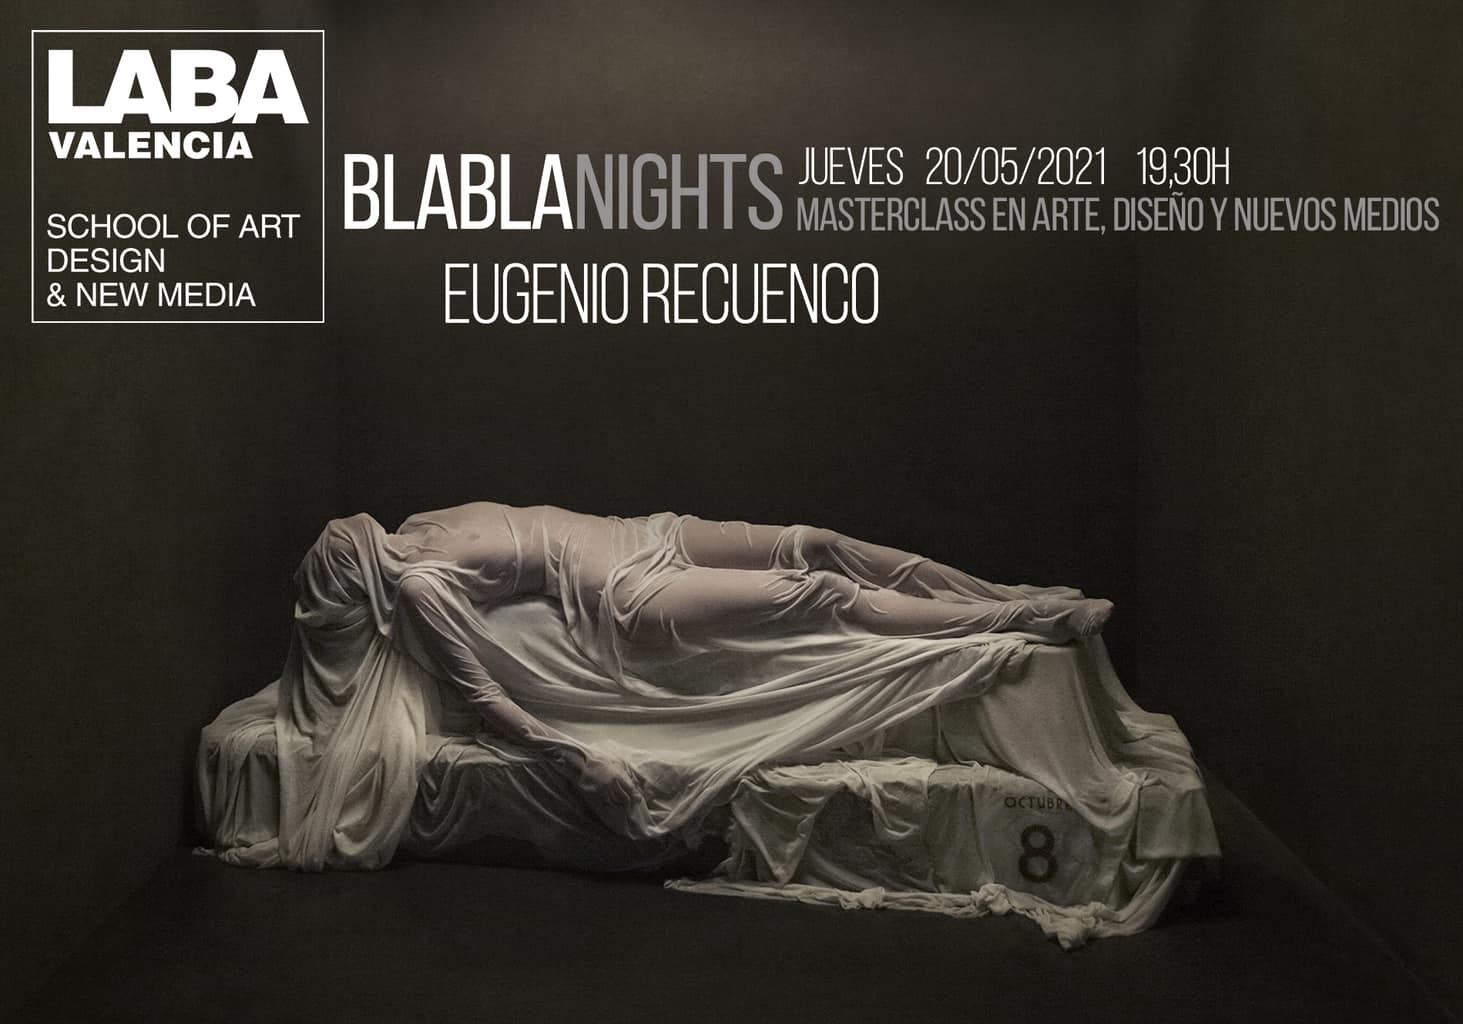 BLABLANIGHTS - Eugenio Recuenco